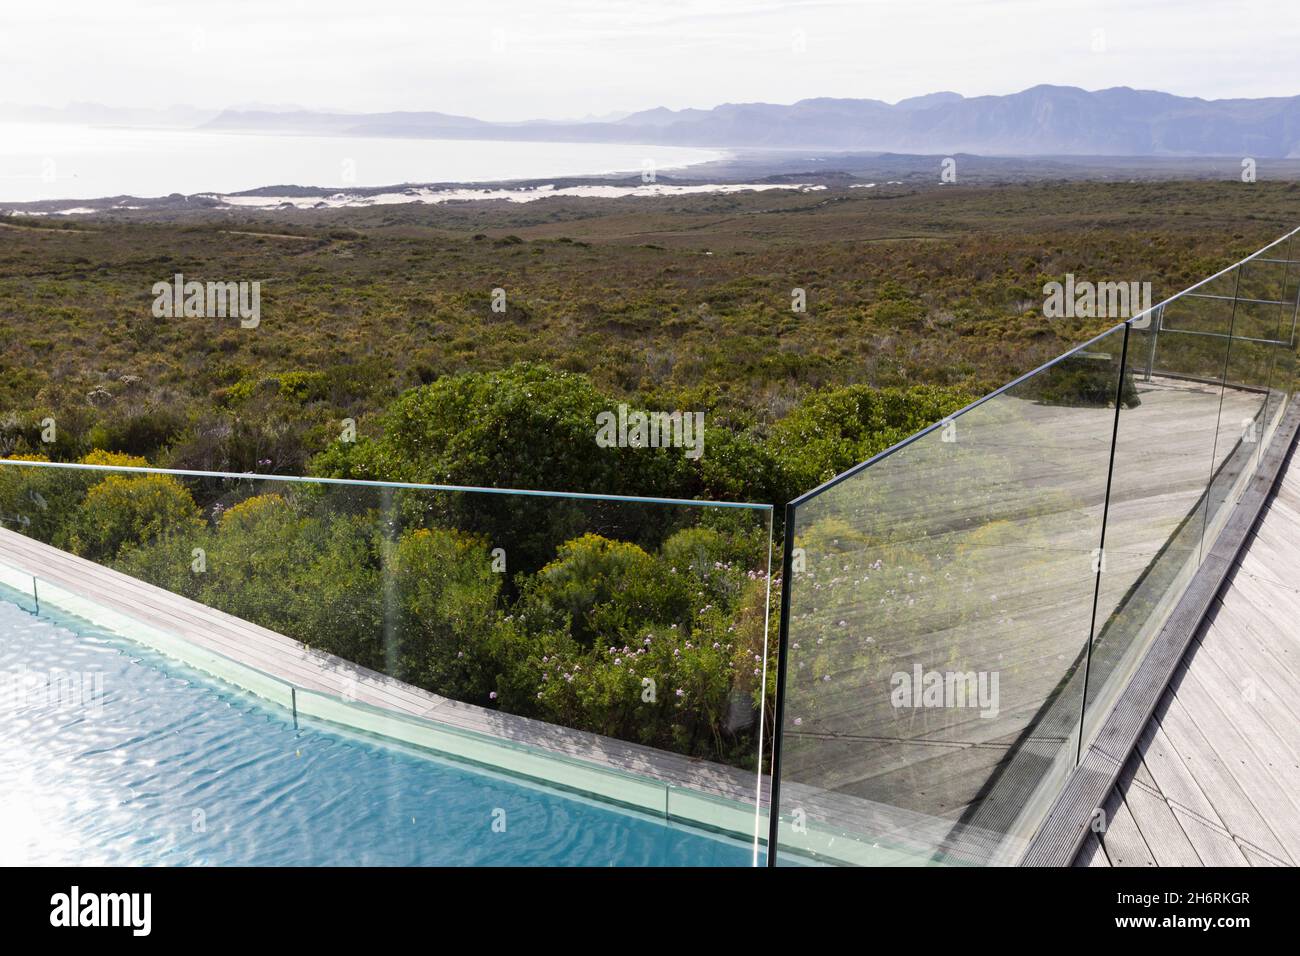 A terrace overlooking a green shrub fynbos landscape Stock Photo